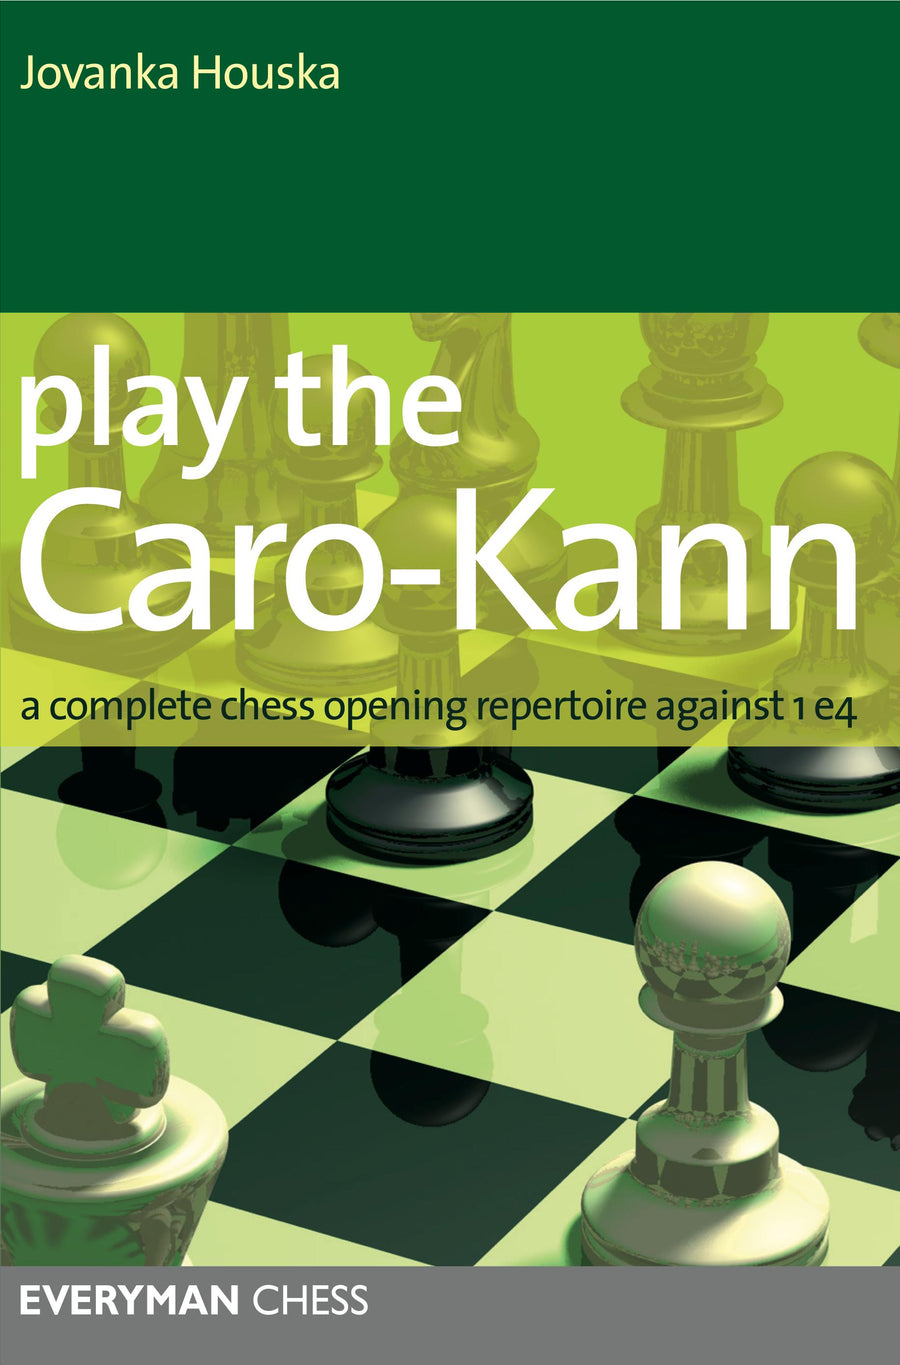 Books on the Caro-Kann Defence